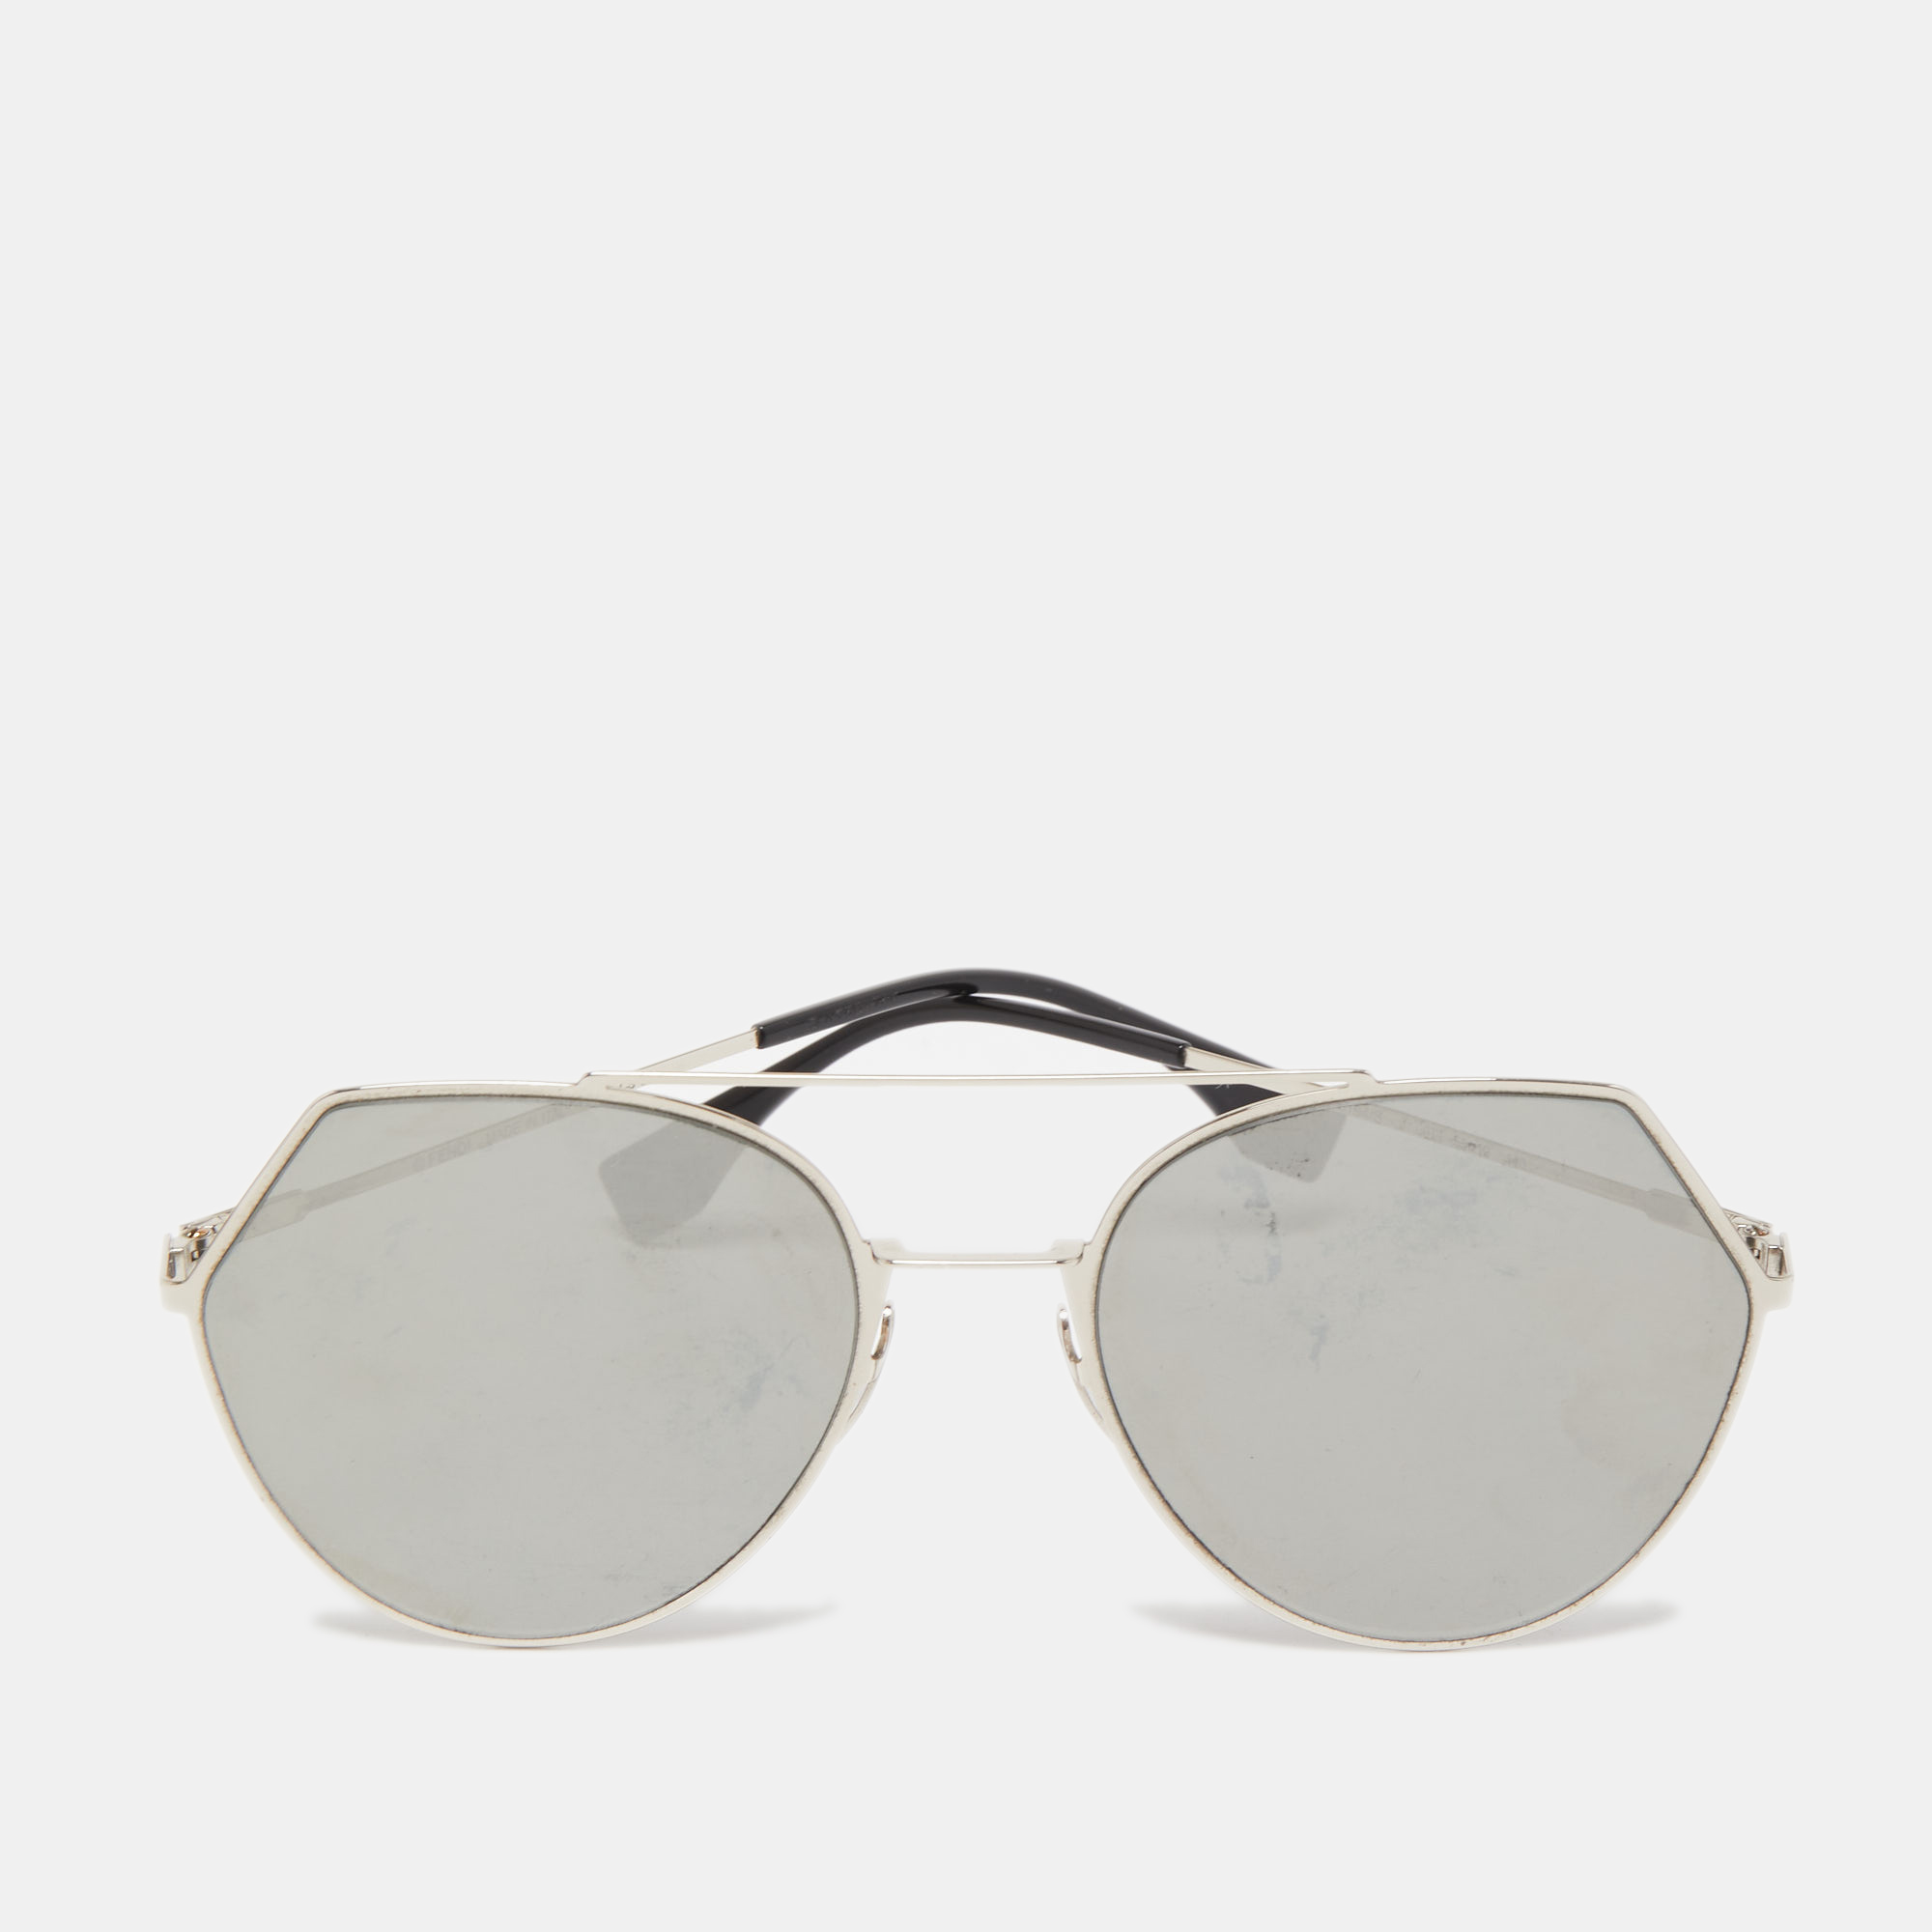 Fendi black/silver ff 0194/s frame aviators sunglasses